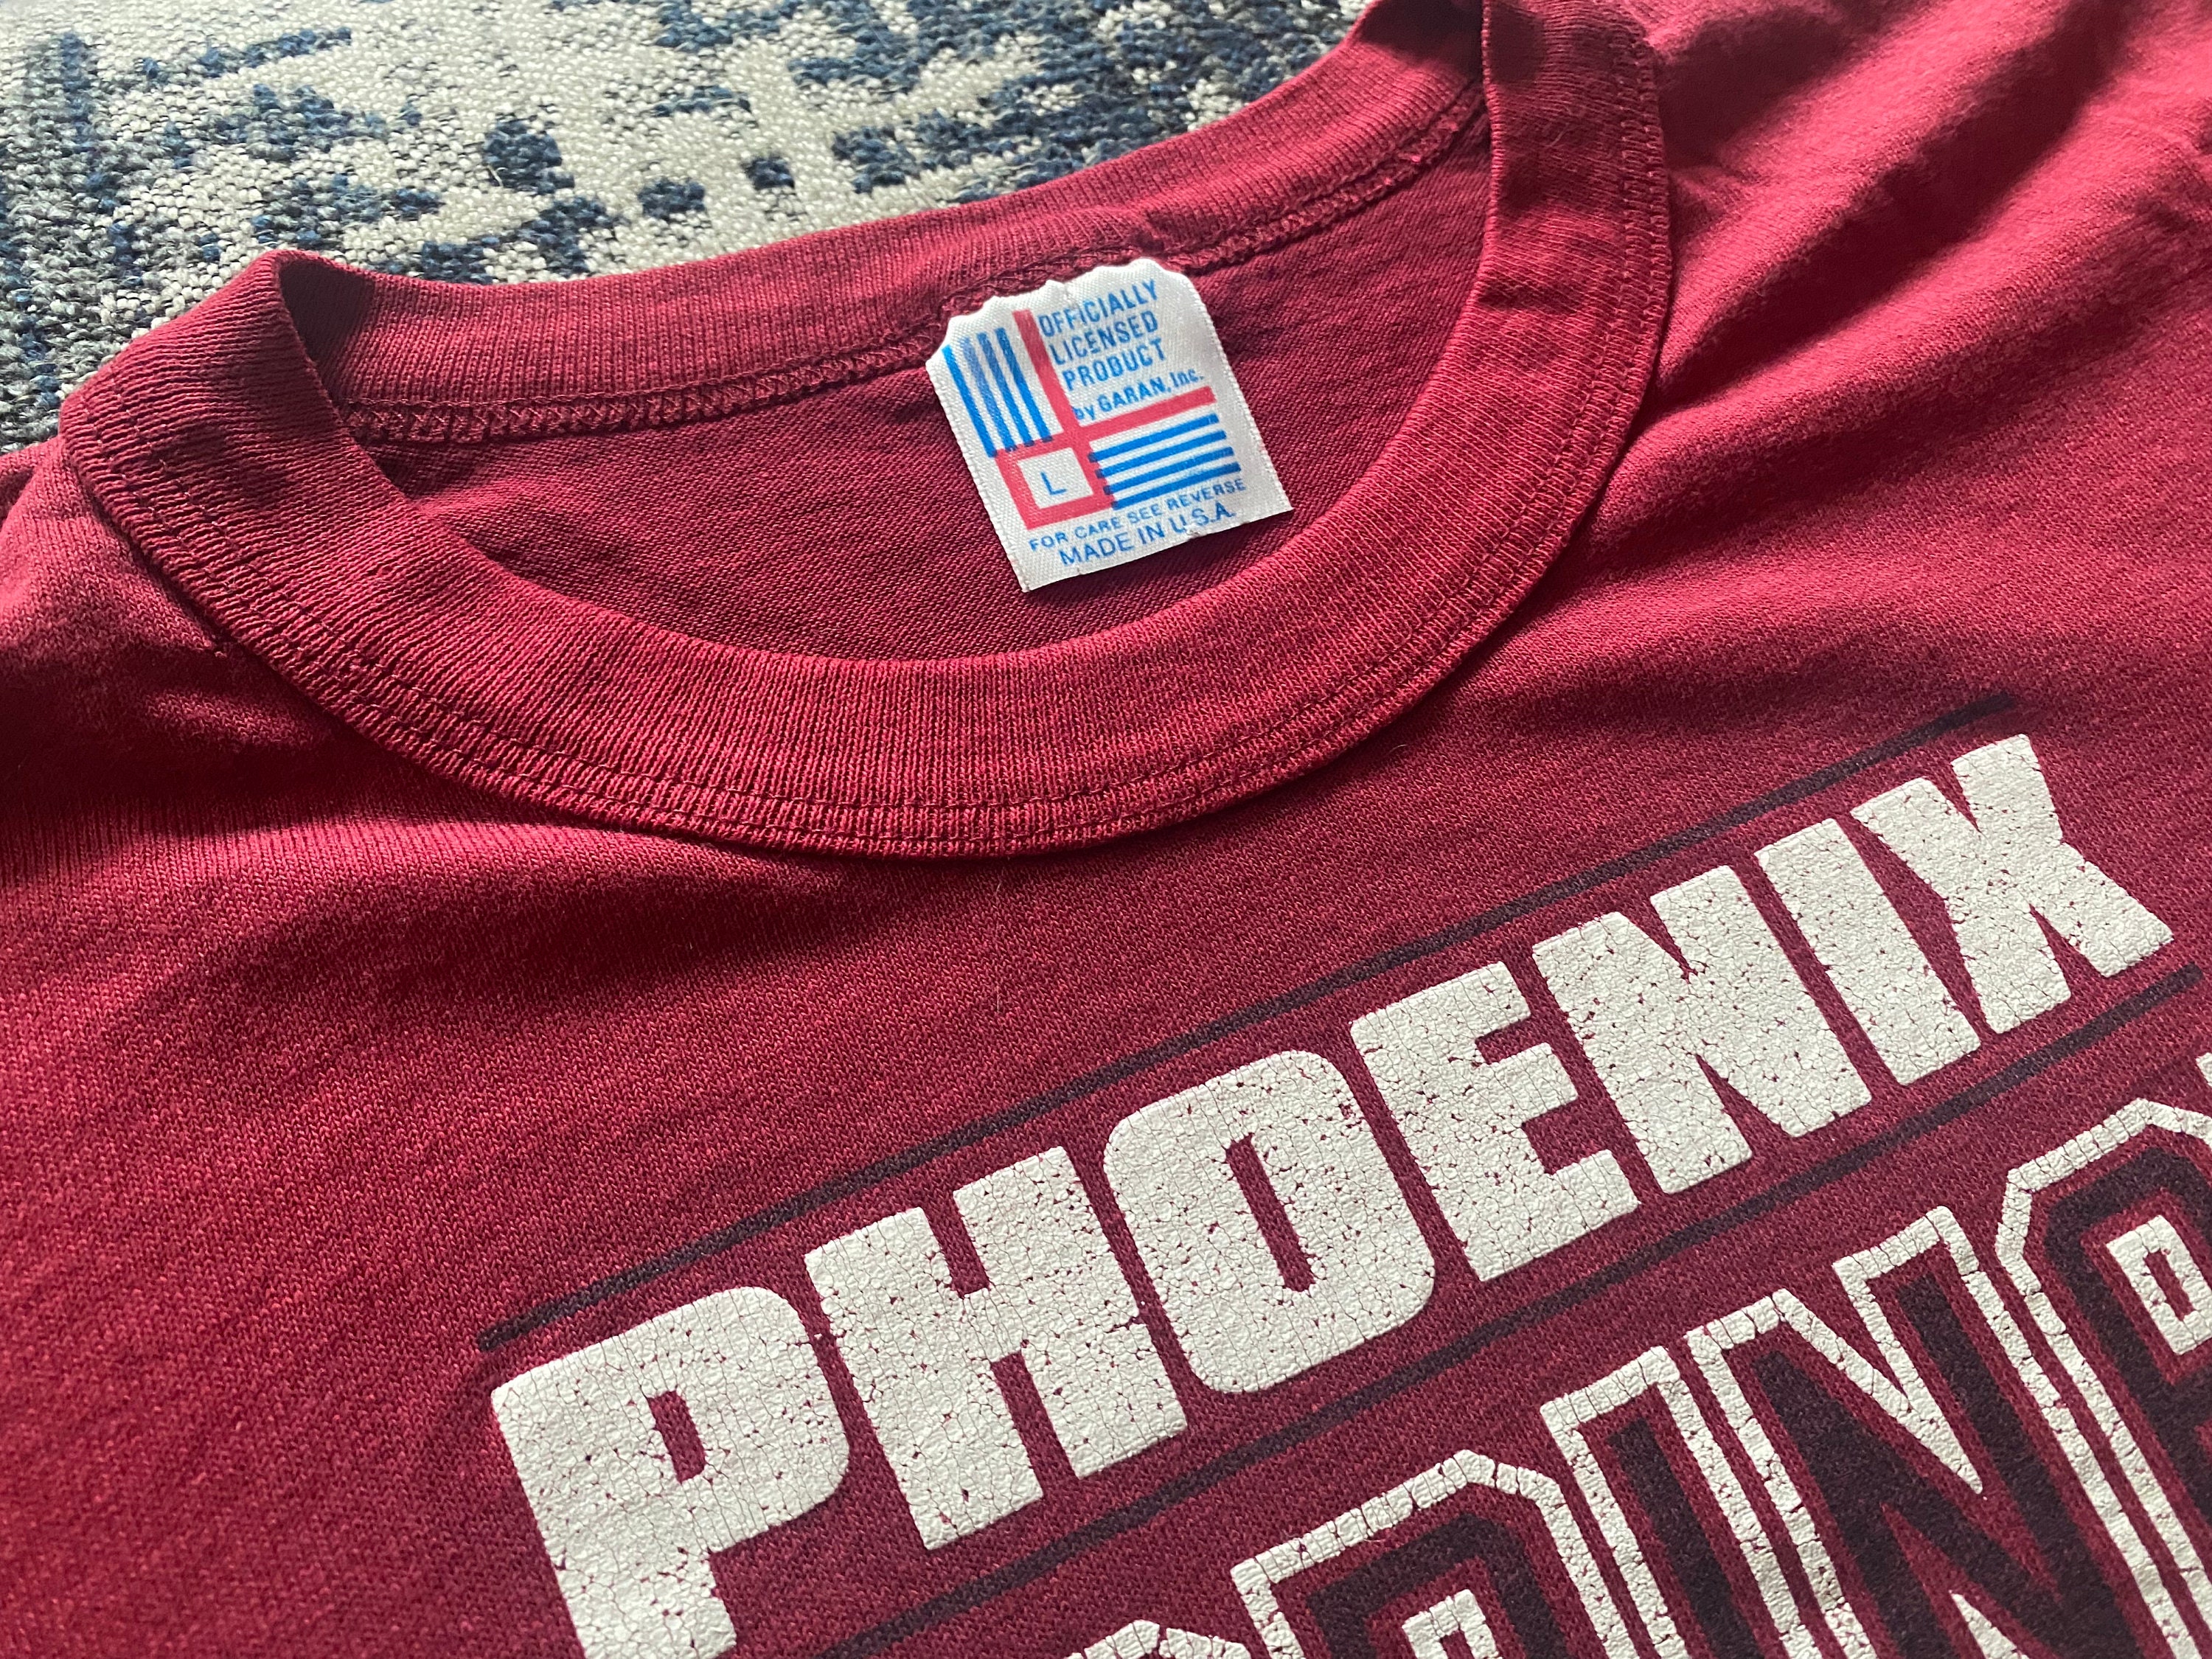 Arizona Cardinals Friend vintage shirt - Dalatshirt